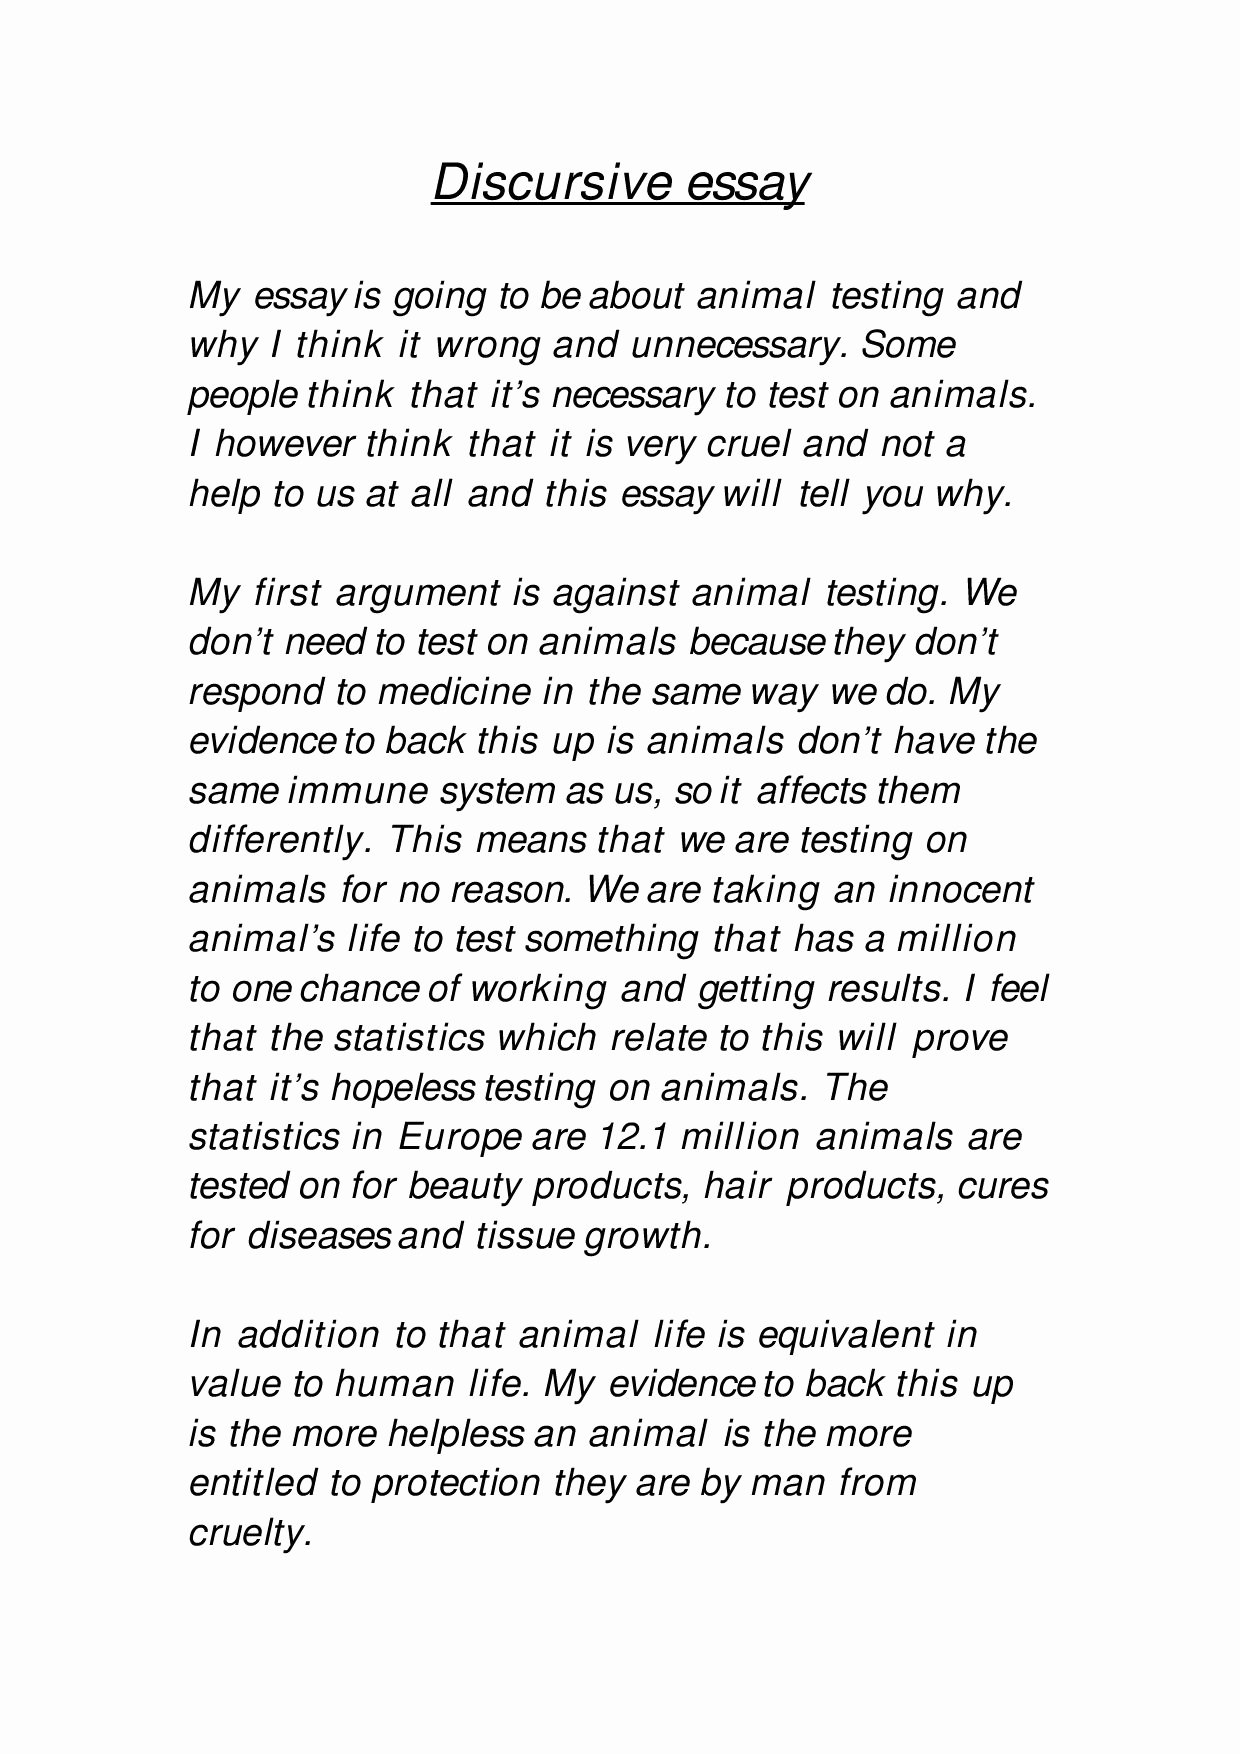 Animal Testing Essay Titles Luxury Discursive Essay by Sean Paul Thomson by Chris Leslie issuu